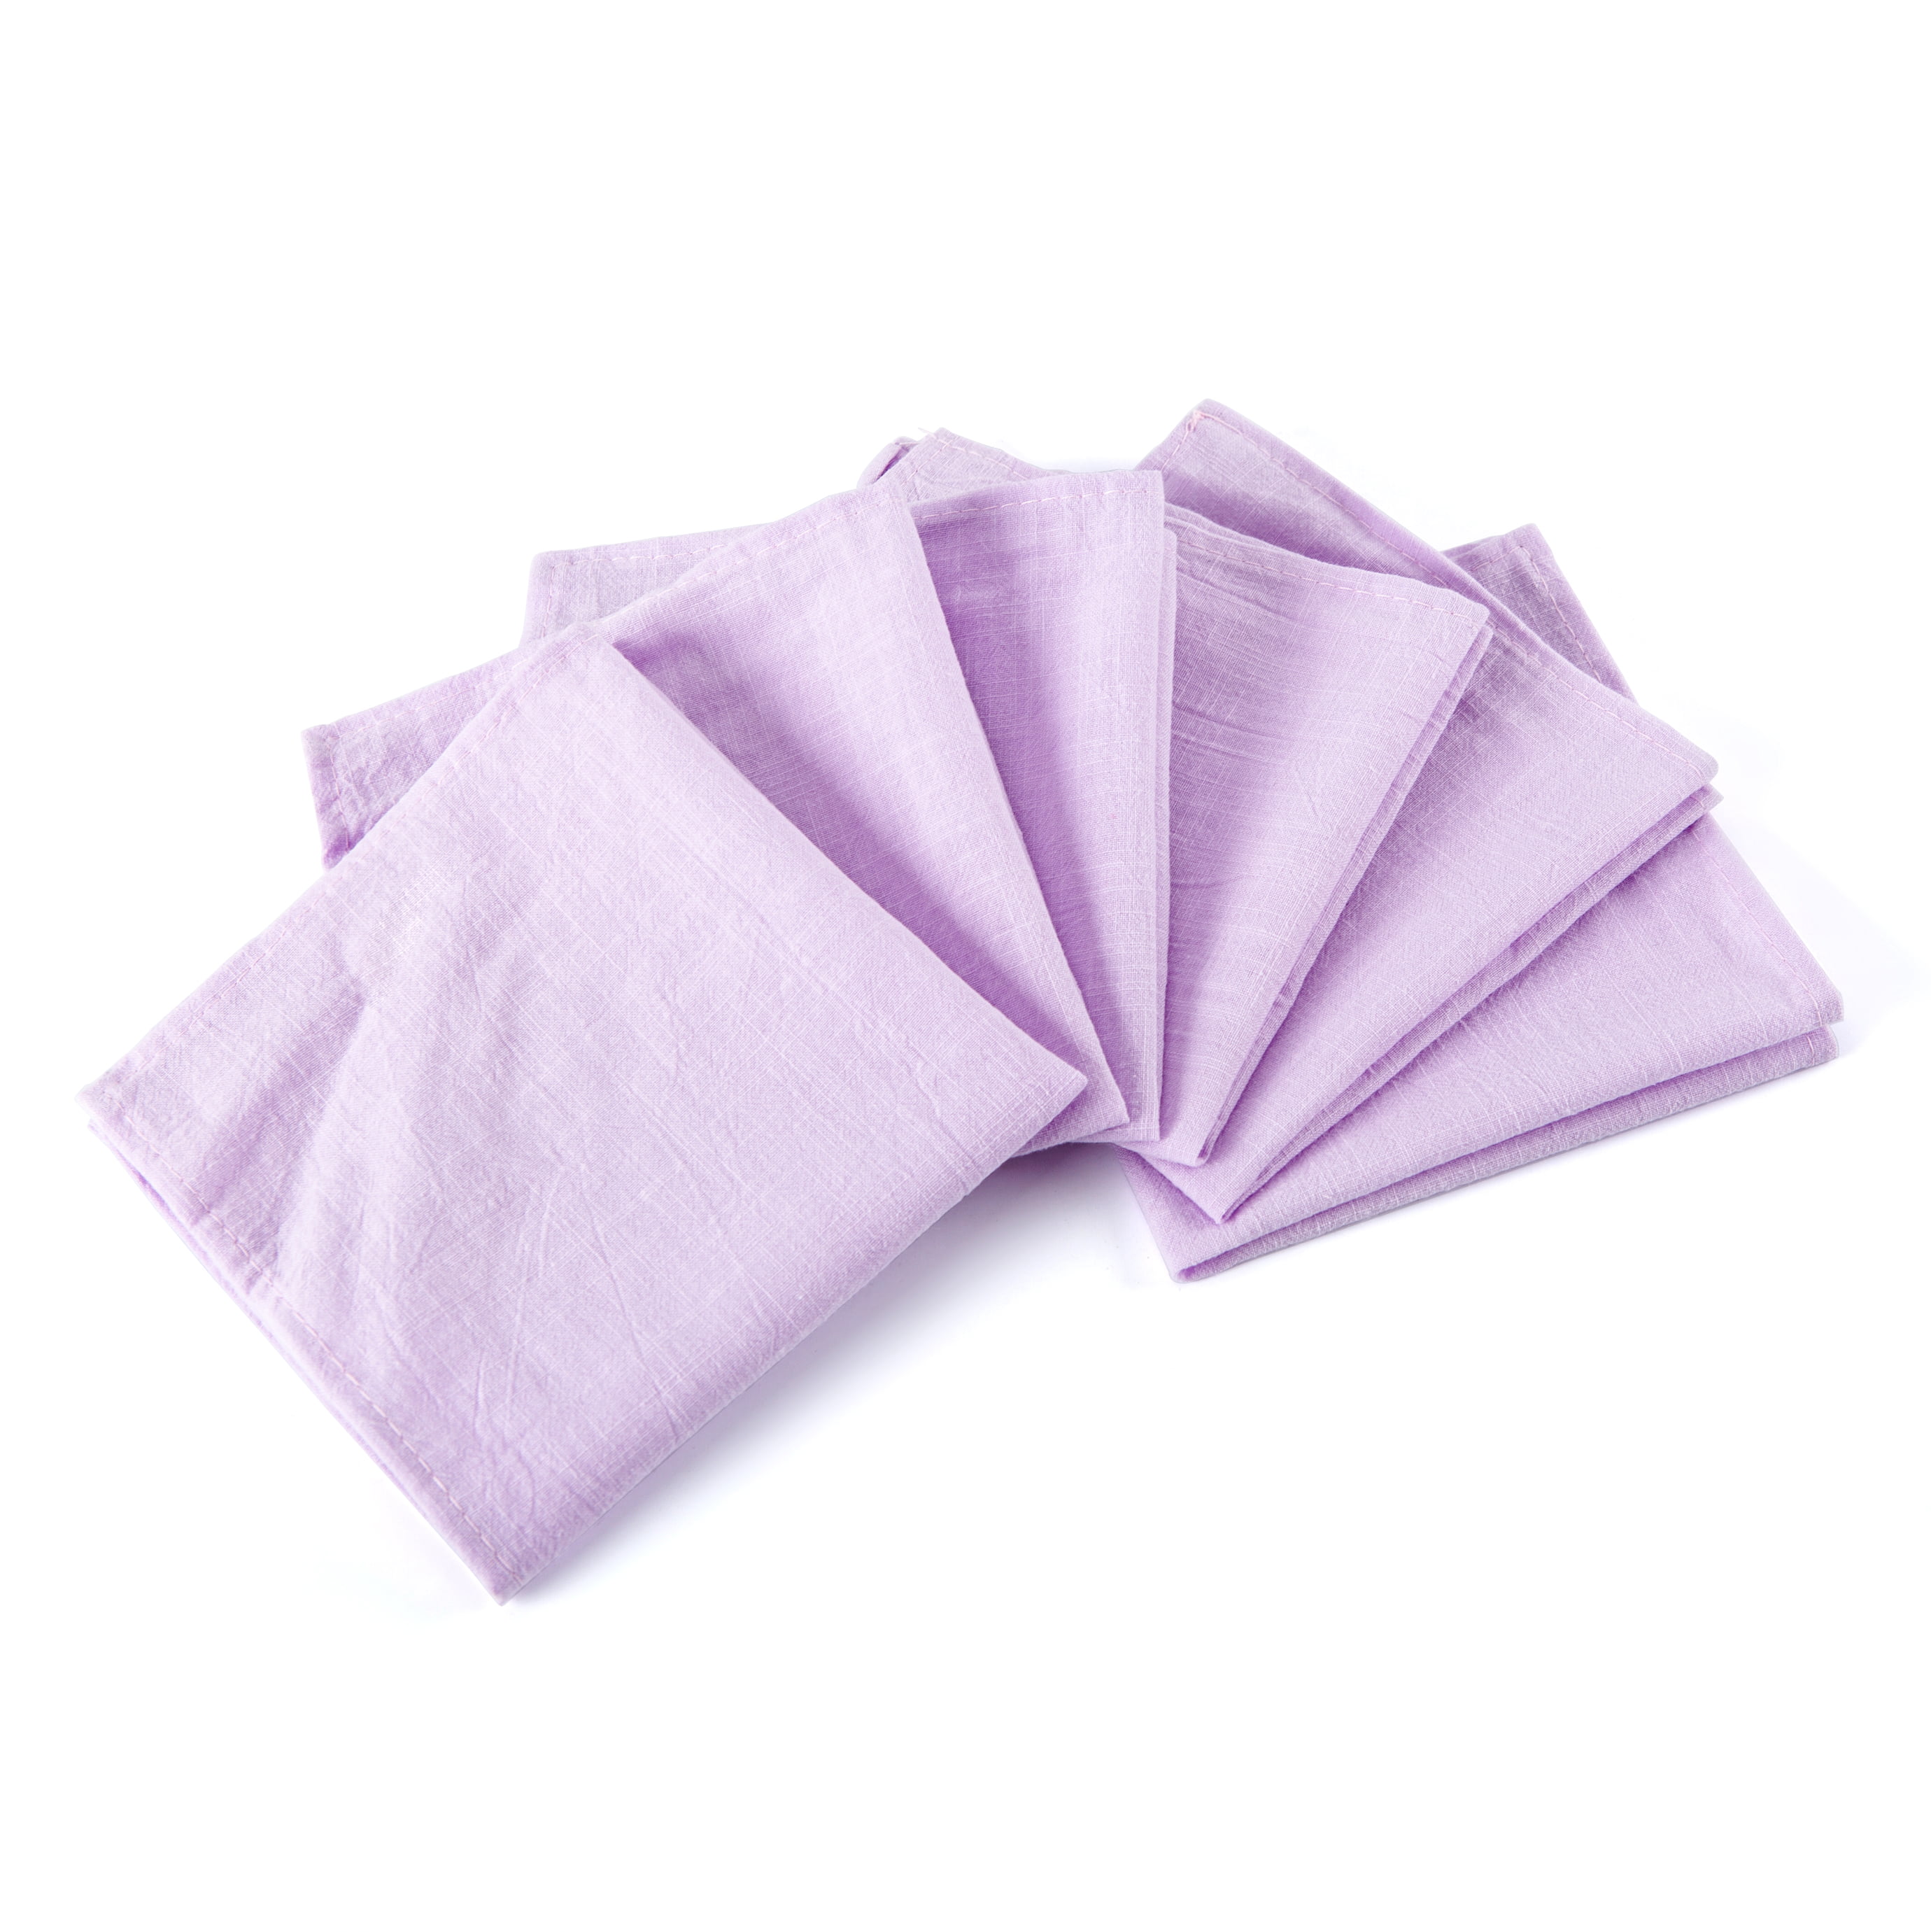 cocktail napkins from softened linen SET of 6 pcs. Washed linen napkins for dinner reusable bulk napkins custom fabric napkins